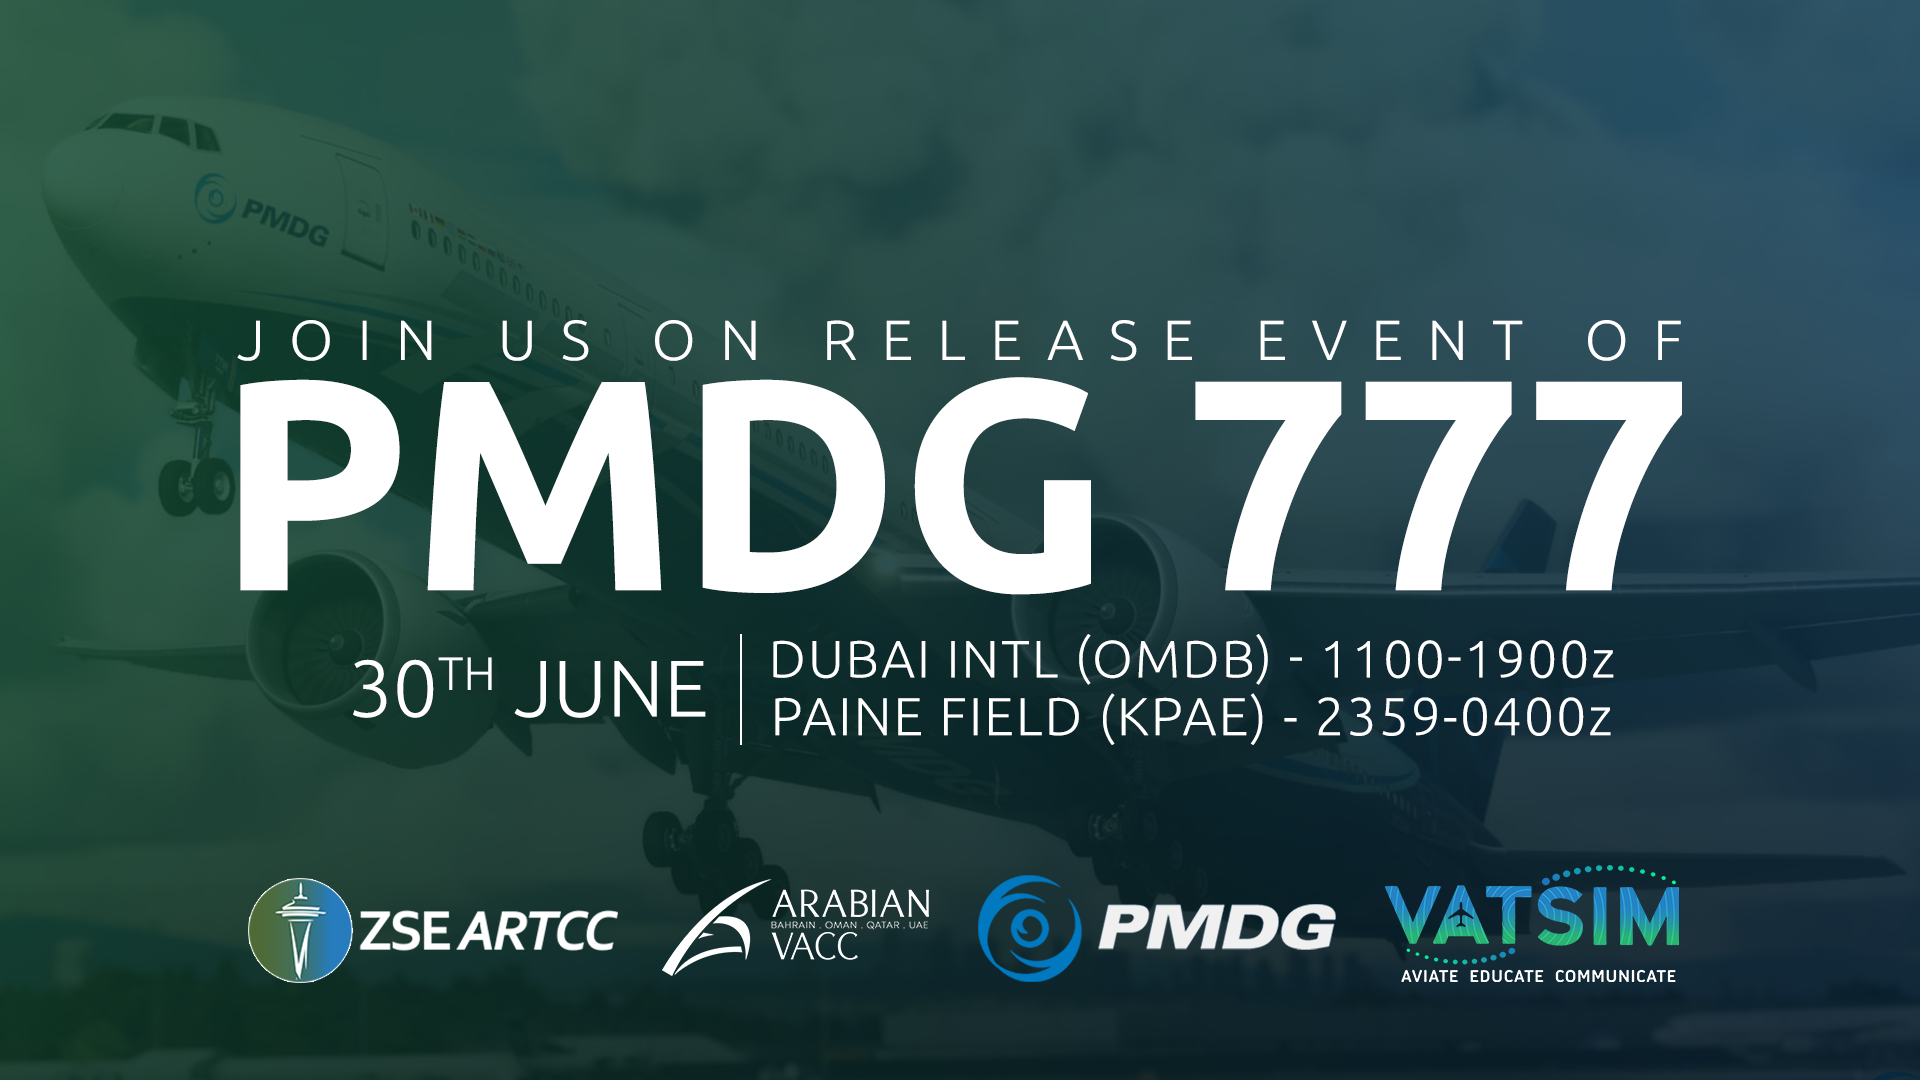 PMDG 777 Release Event